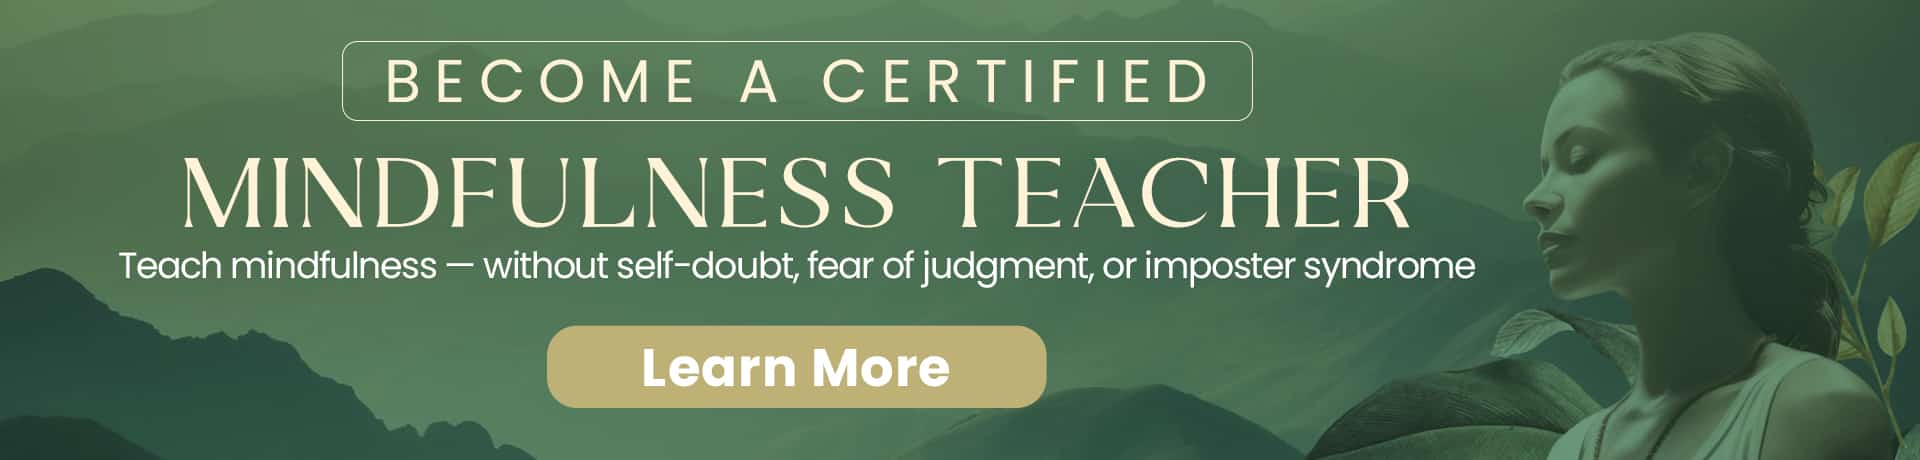 Become a Certified Mindfulness Teacher